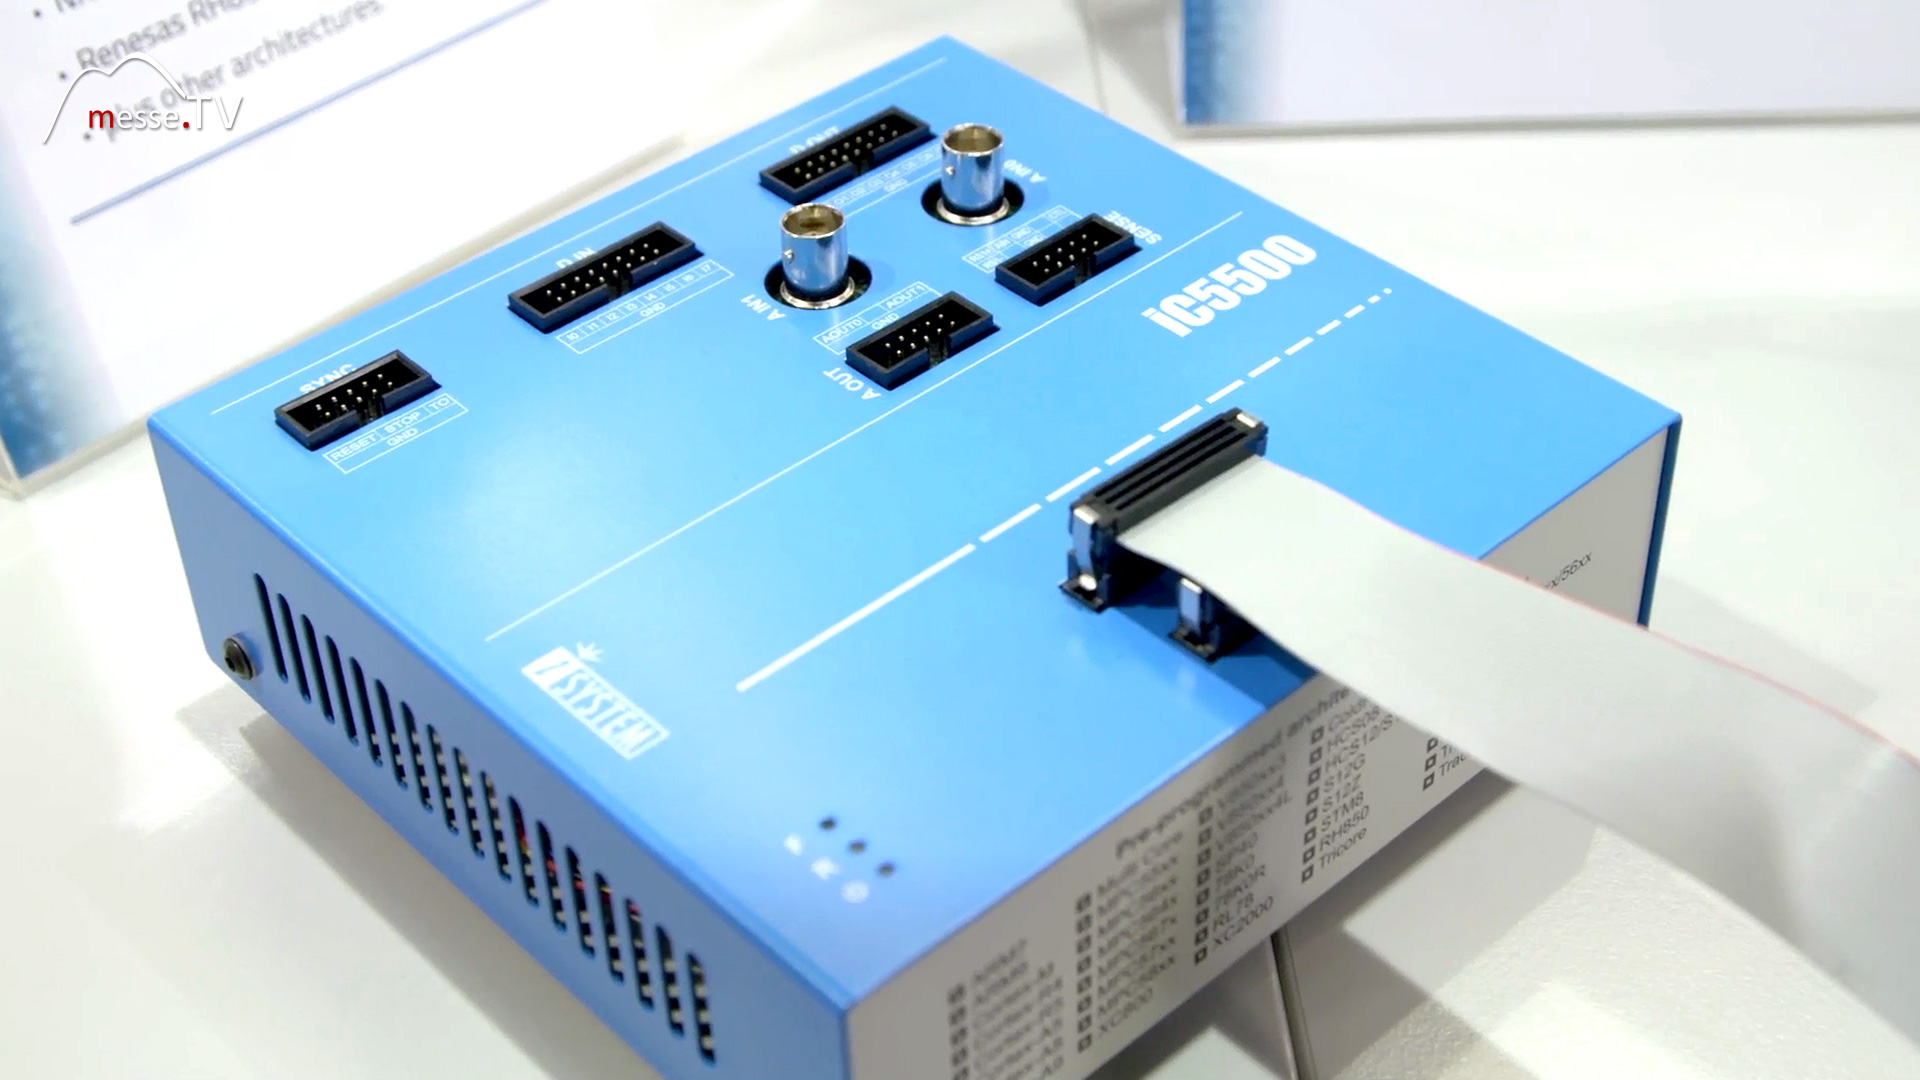 iSystem Blue Box mit Testsoftware embedded world 2016 Messe Nuernberg